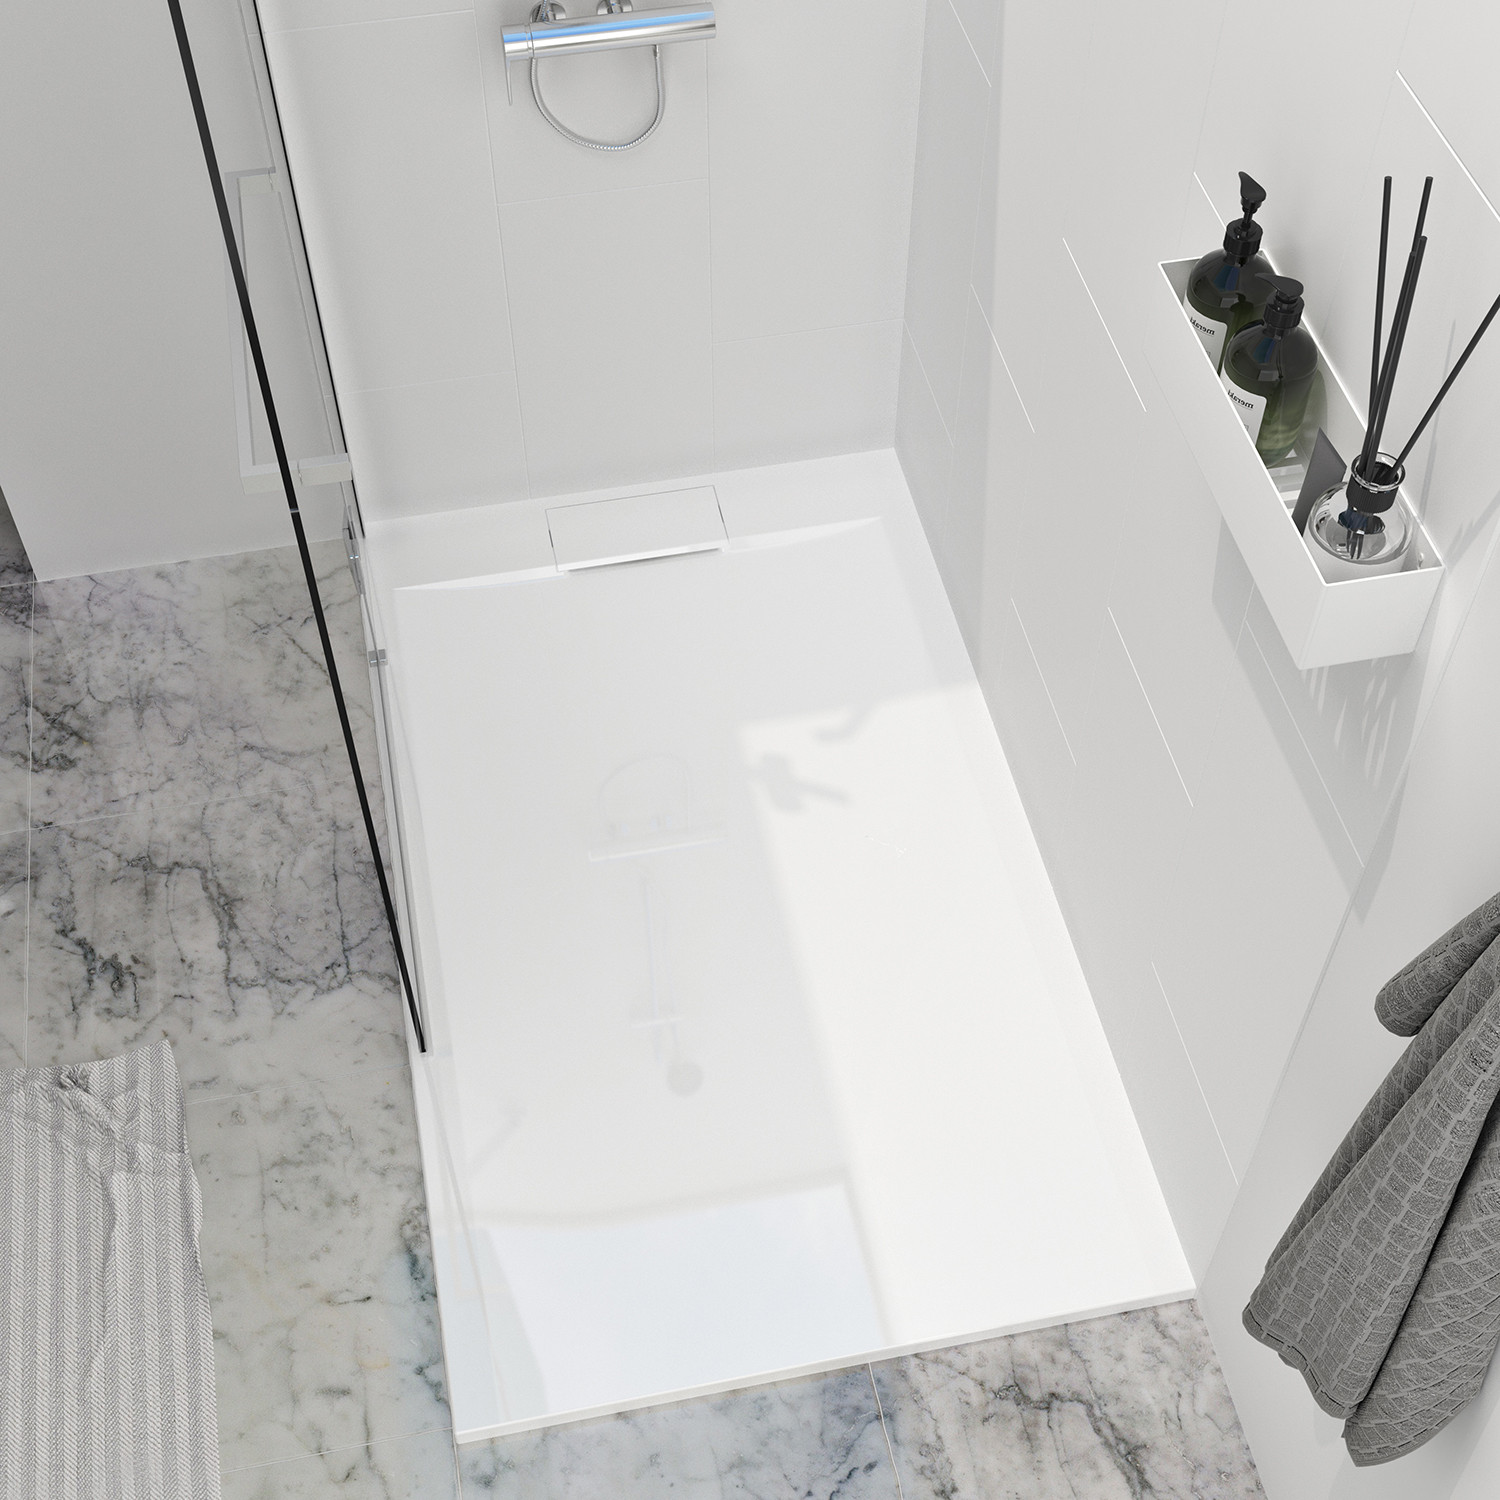 Shower base Liss 60 x 32, custom-made tile flange installation, in glossy white